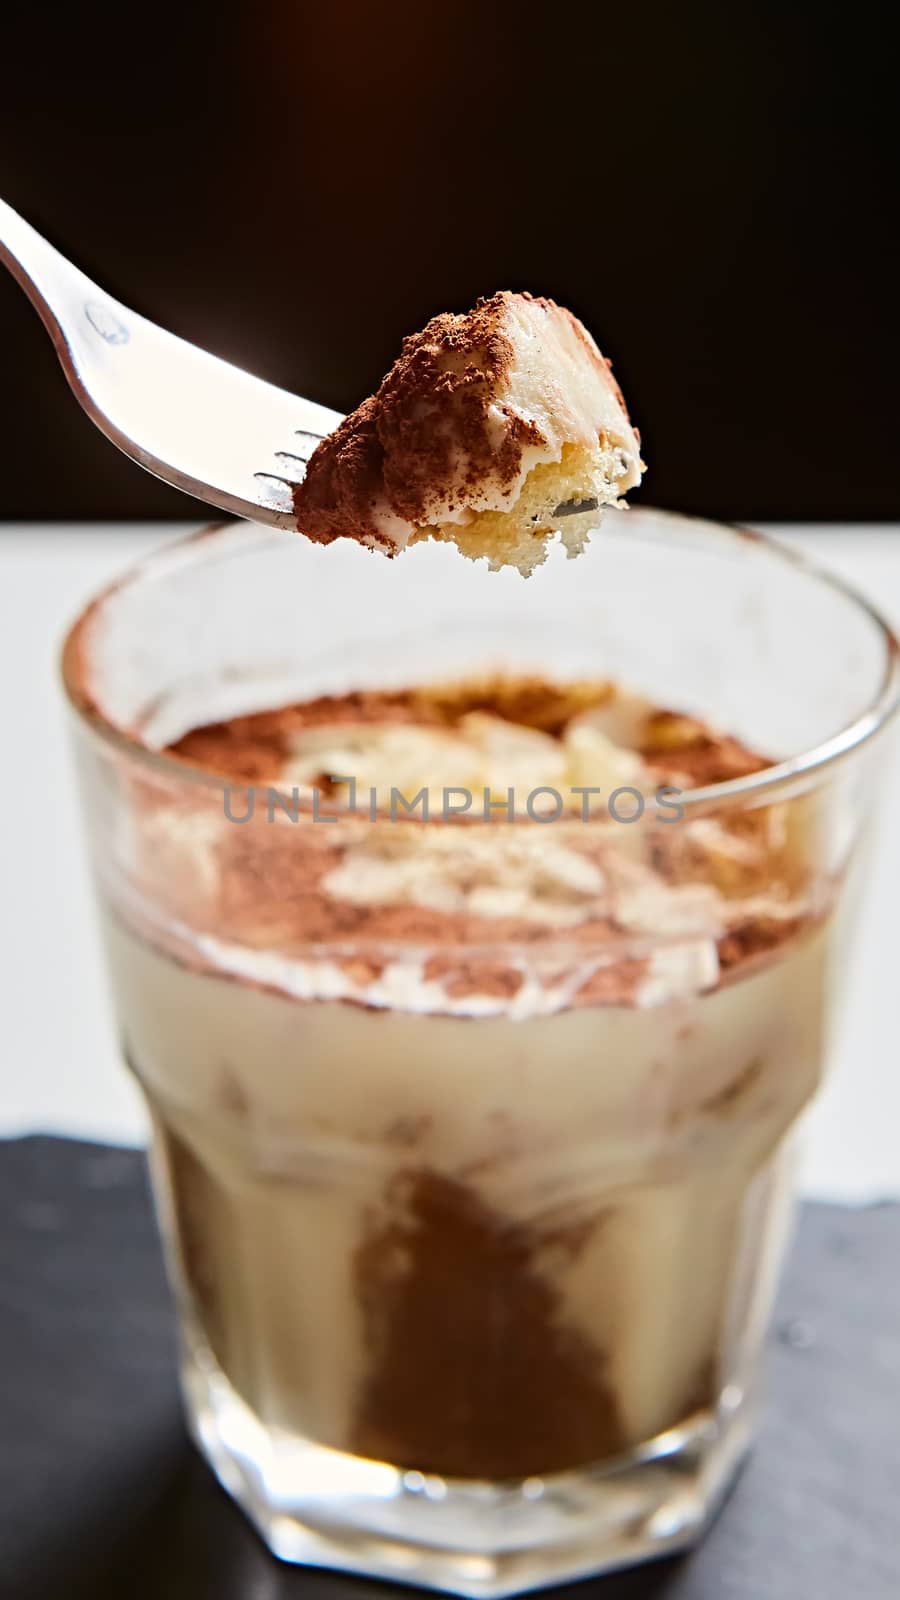 Tiramisu in glass, traditional coffee flavored Italian dessert made of ladyfingers and mascarpone